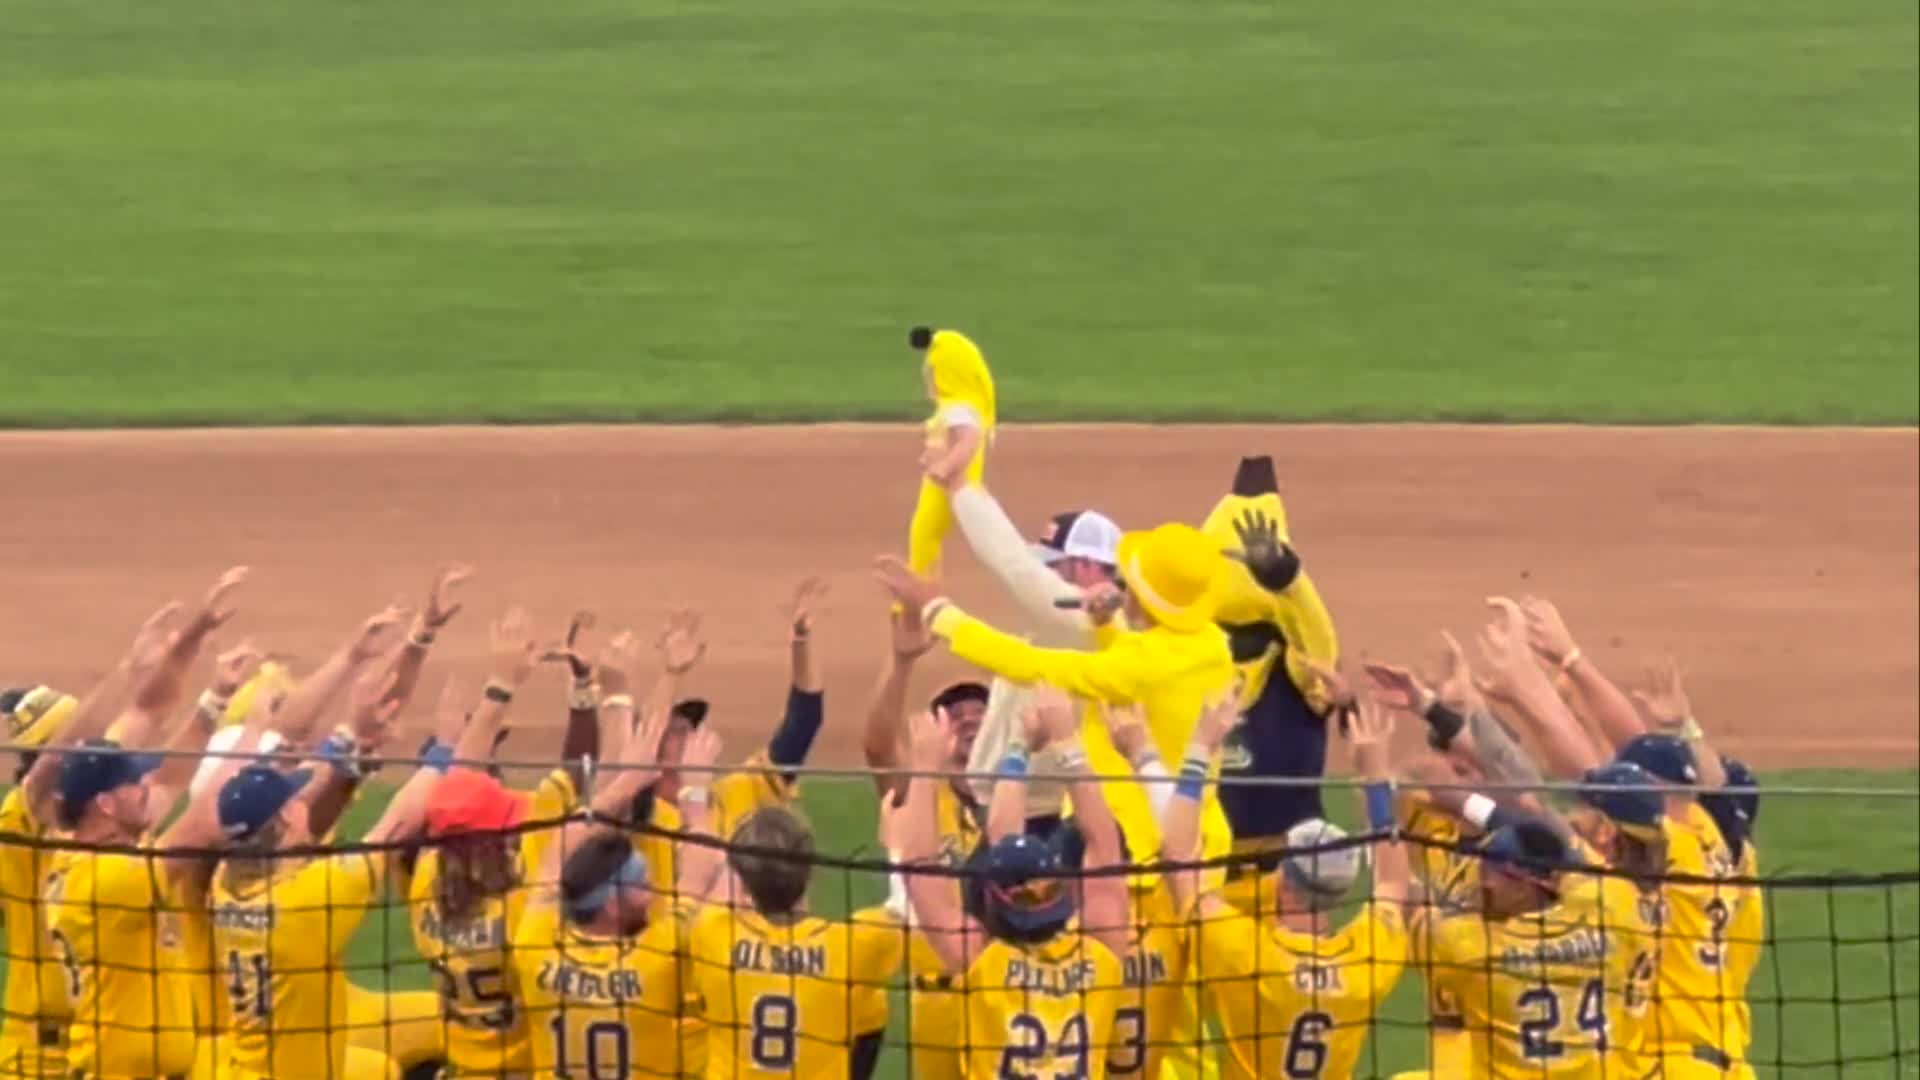 Red Sox World Series champion returns to mound with Savannah Bananas